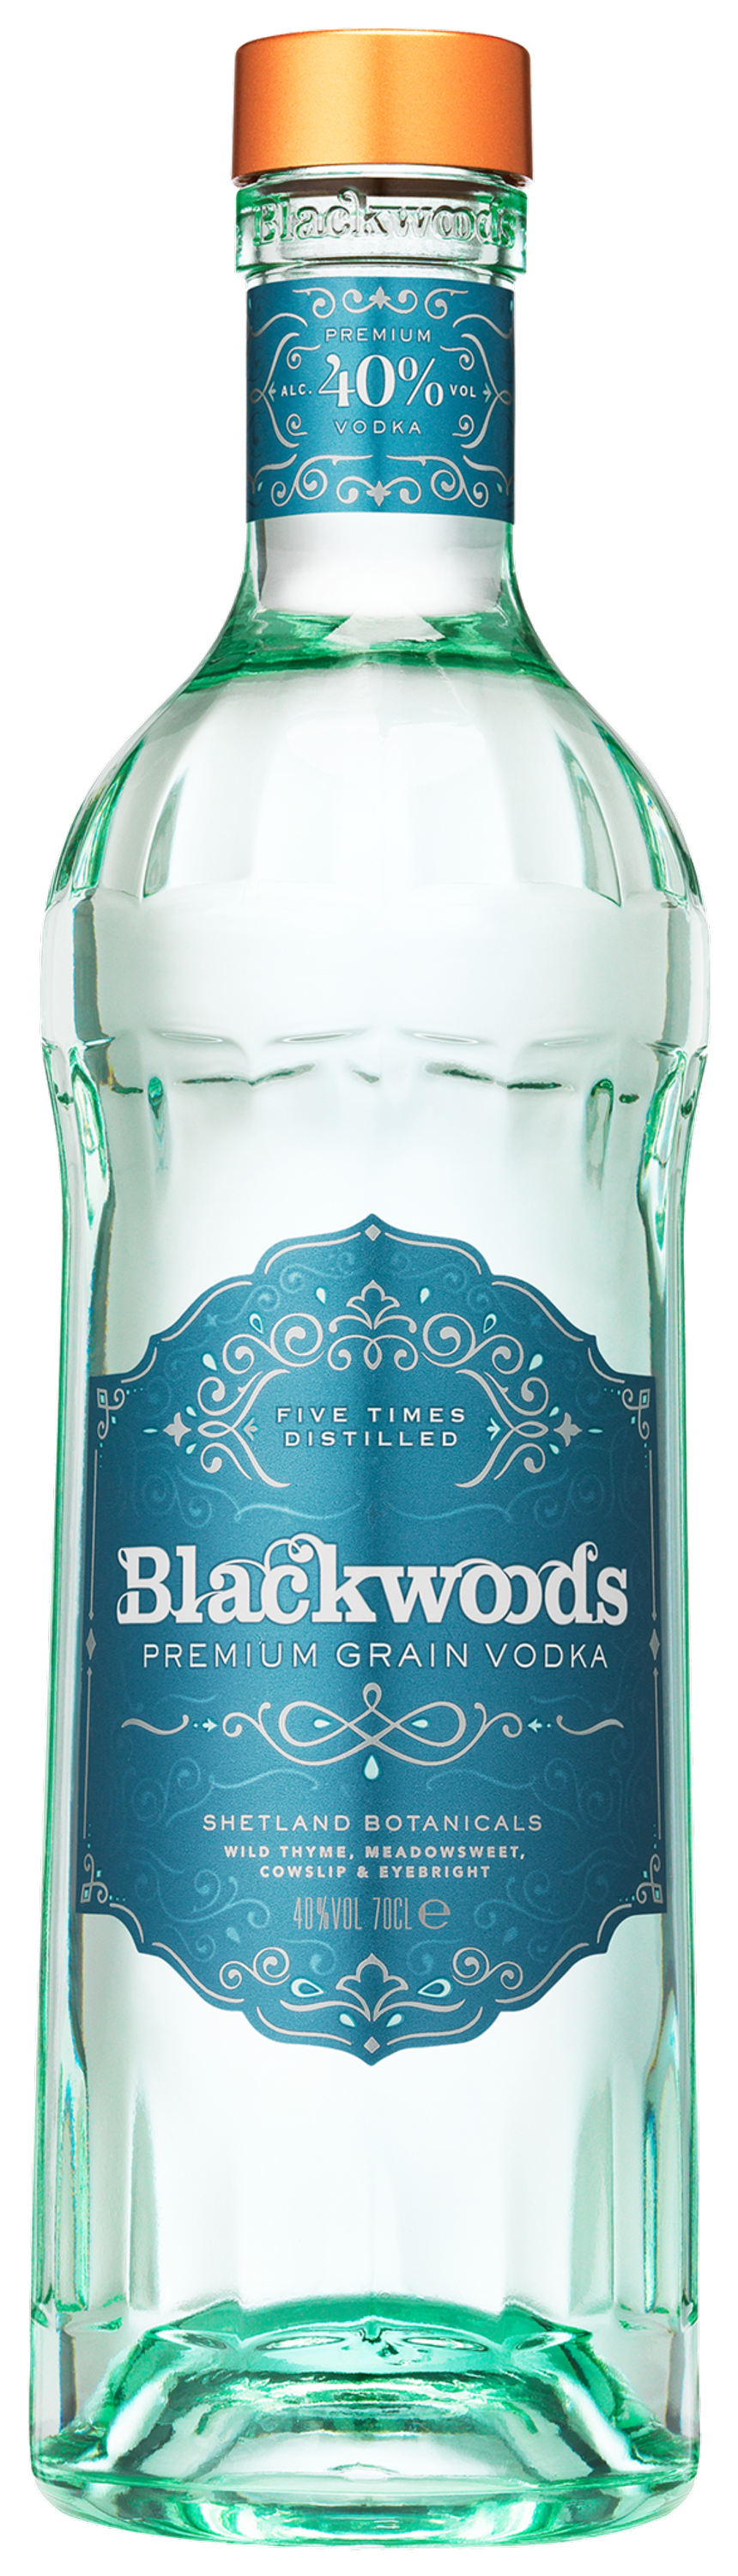 Blackwood's Premium Vodka 0,7l, alc. 40 Vol.-%, Wodka Schottland